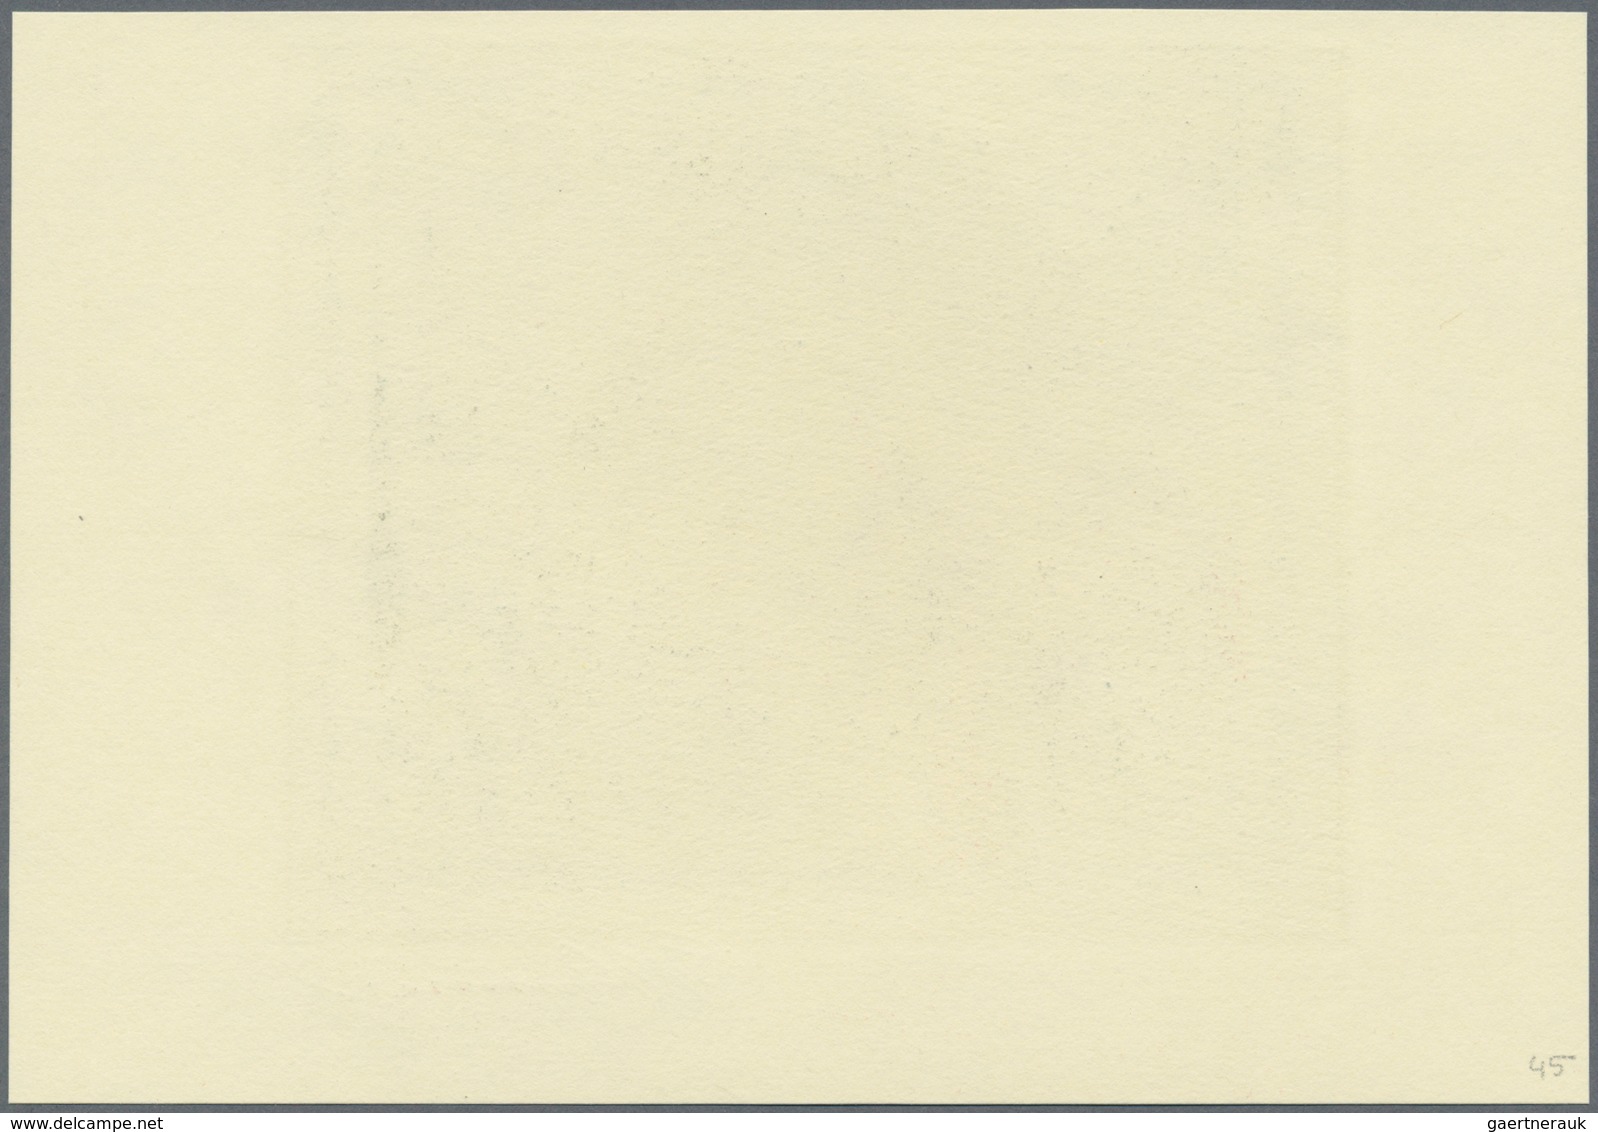 China - Volksrepublik - Ganzsachen: 1970/73, "paper cut" envelope 10 f. carmine uprated 2 f. (strip-